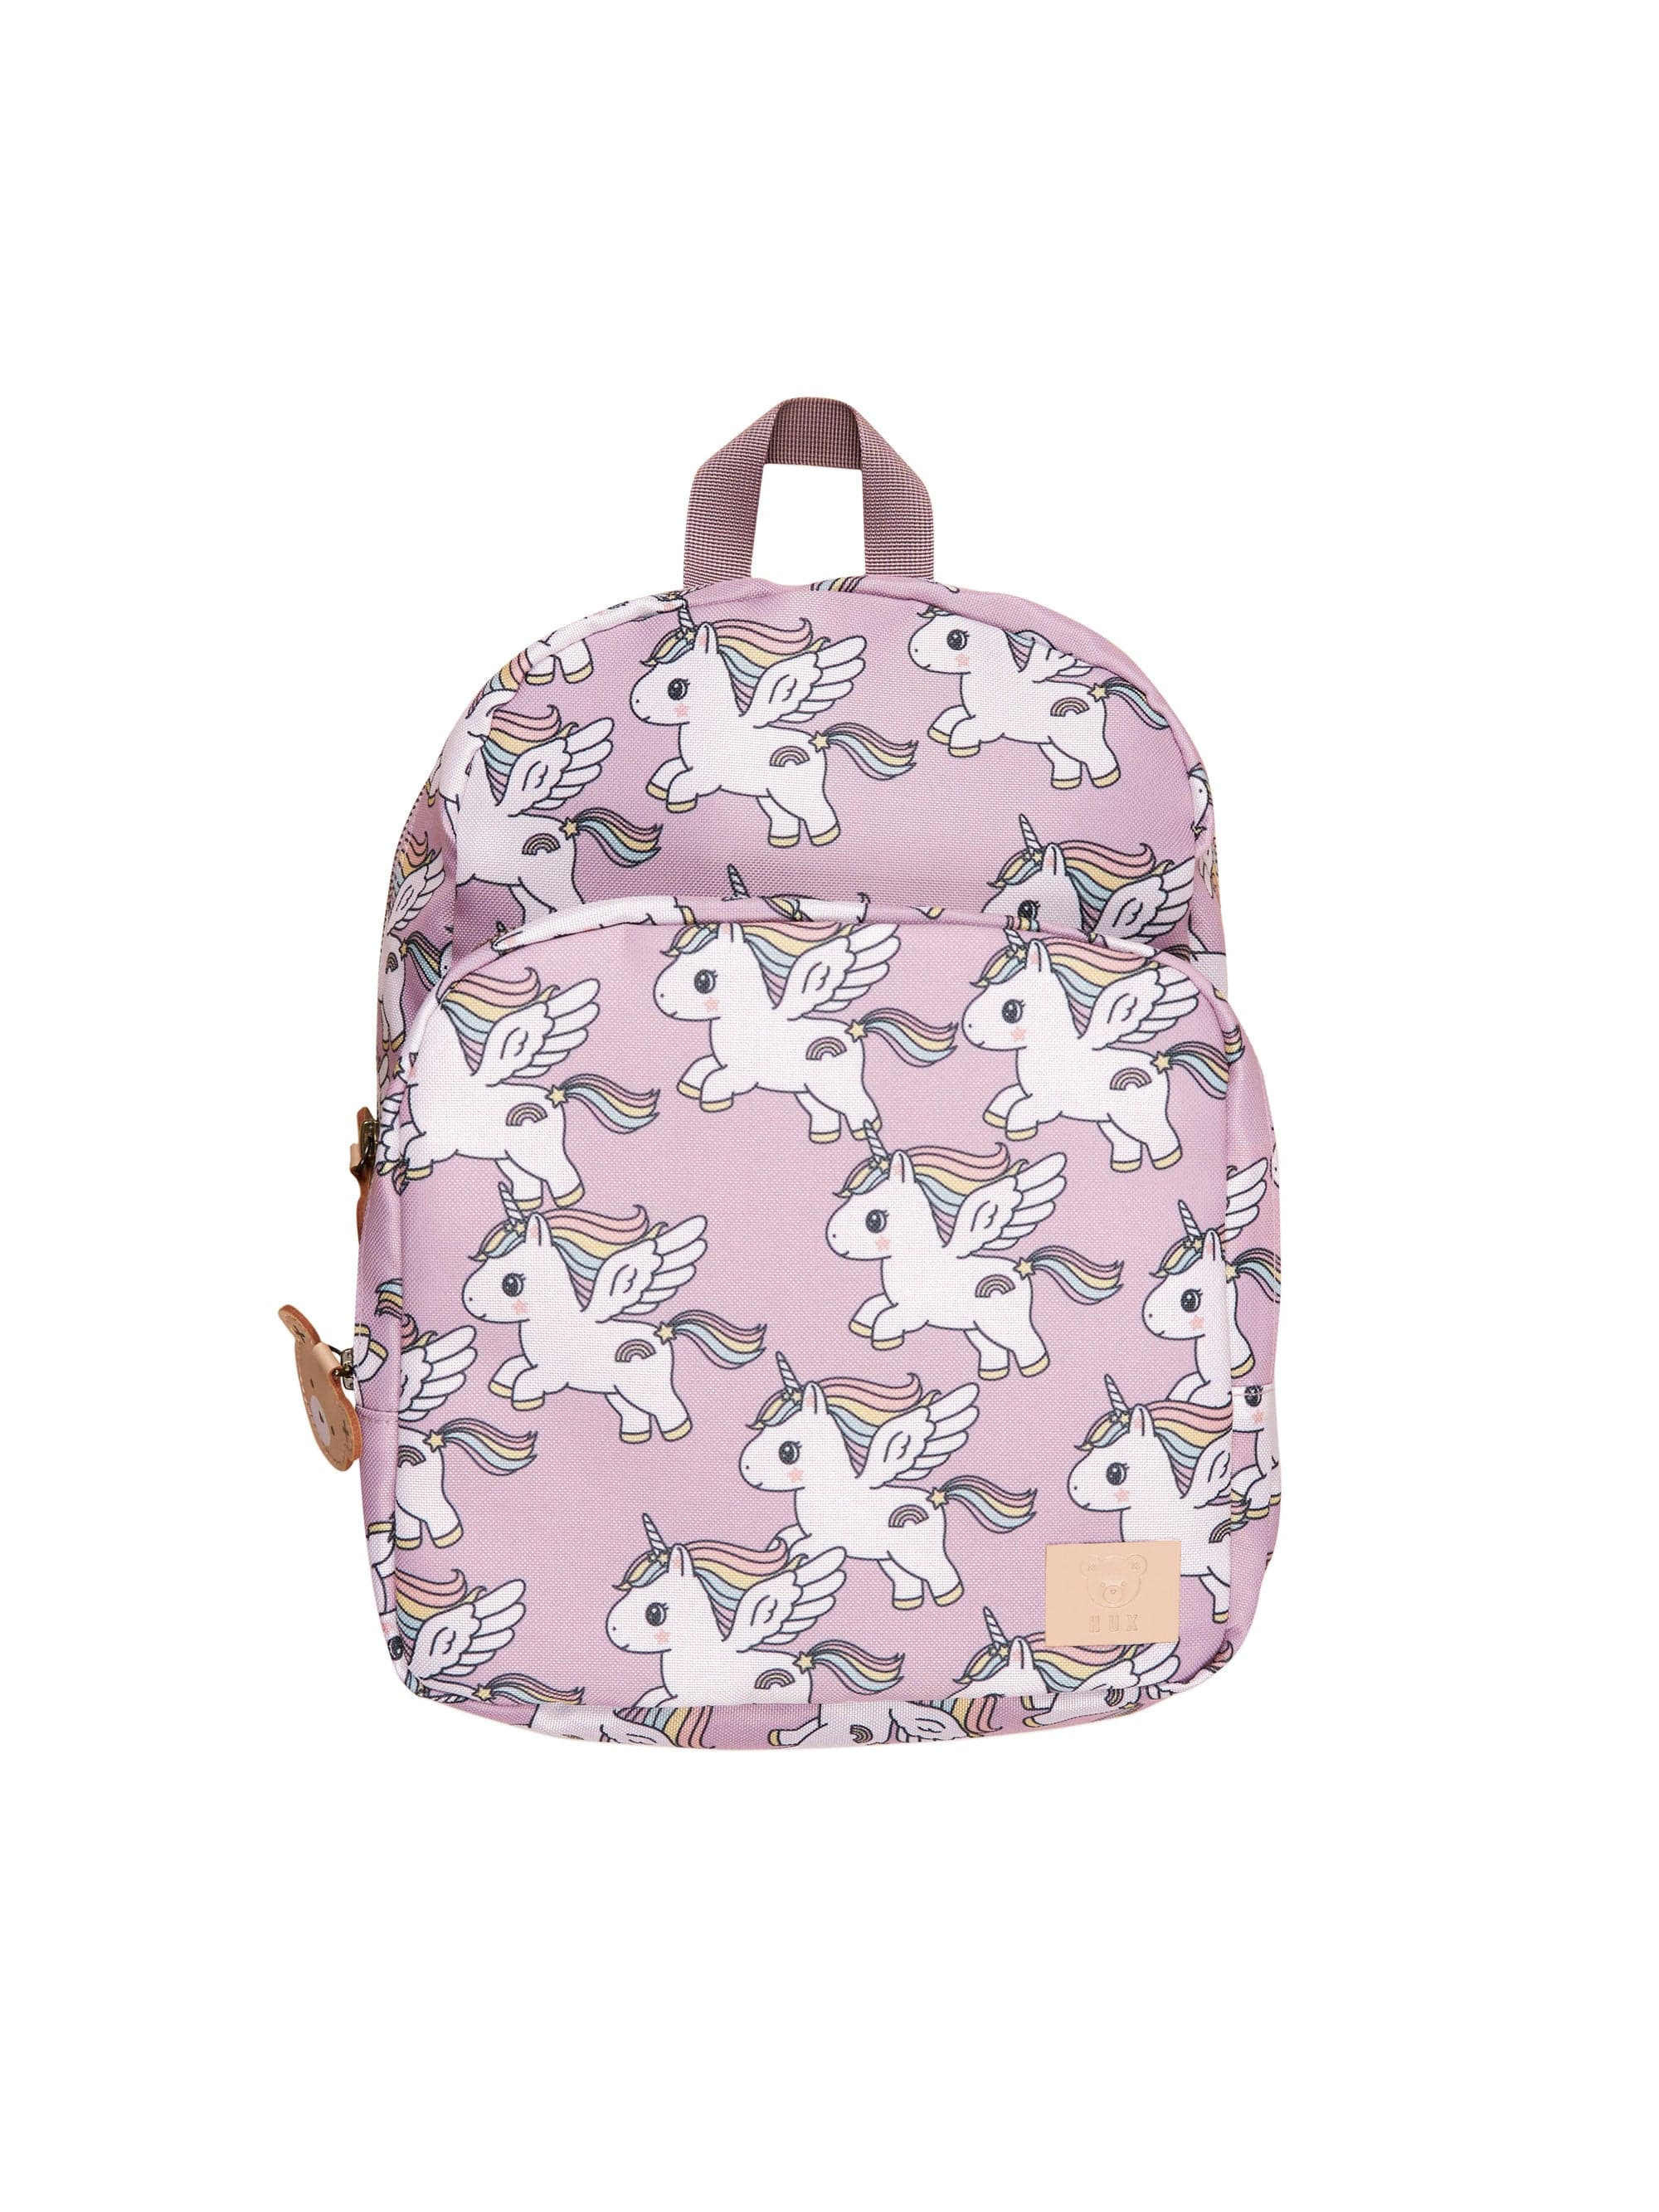 Huxbaby Backpacks Magical Unicorn Backpack